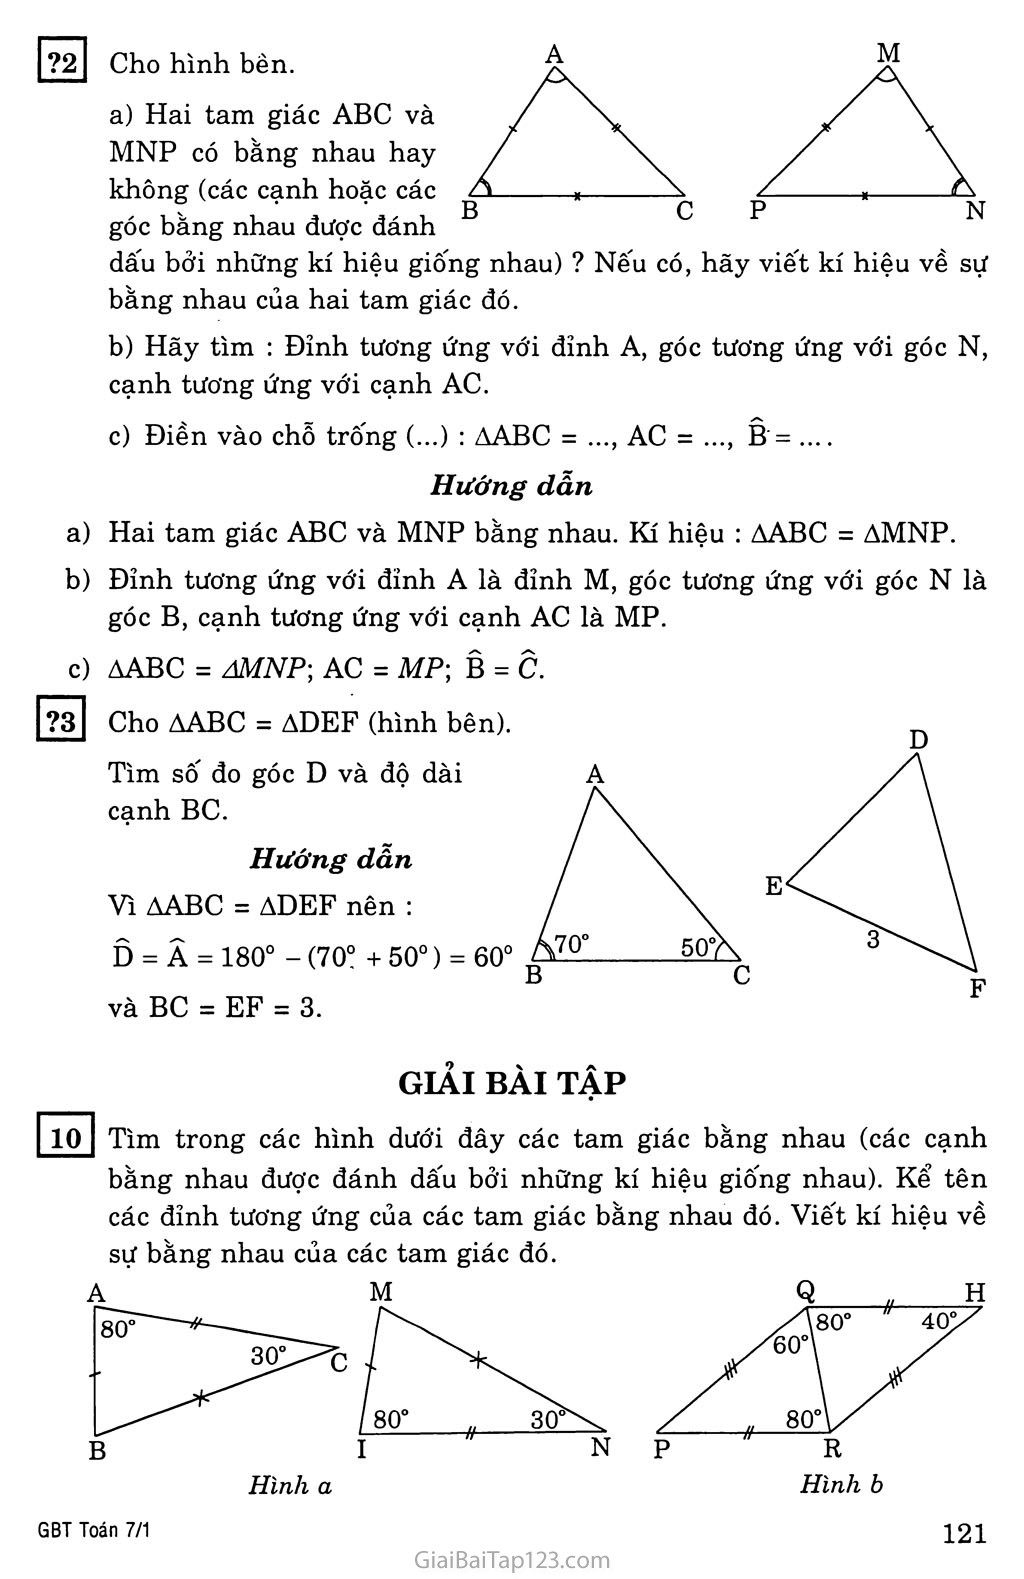 §2. Hai tam giác bằng nhau trang 2